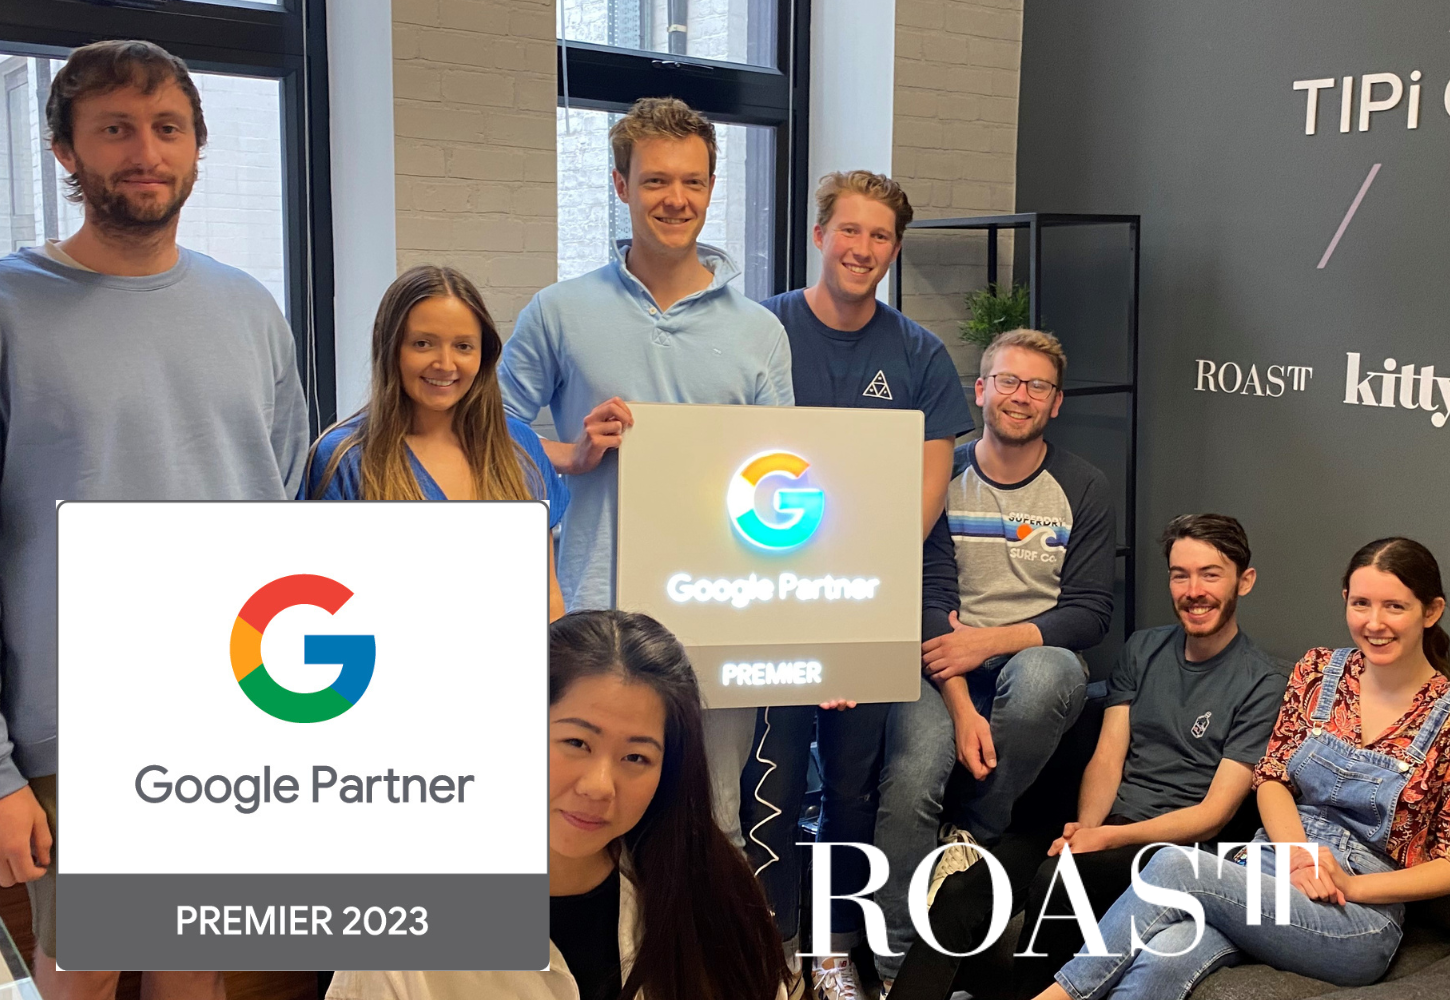 ROAST are a 2023 Google Premier Partner